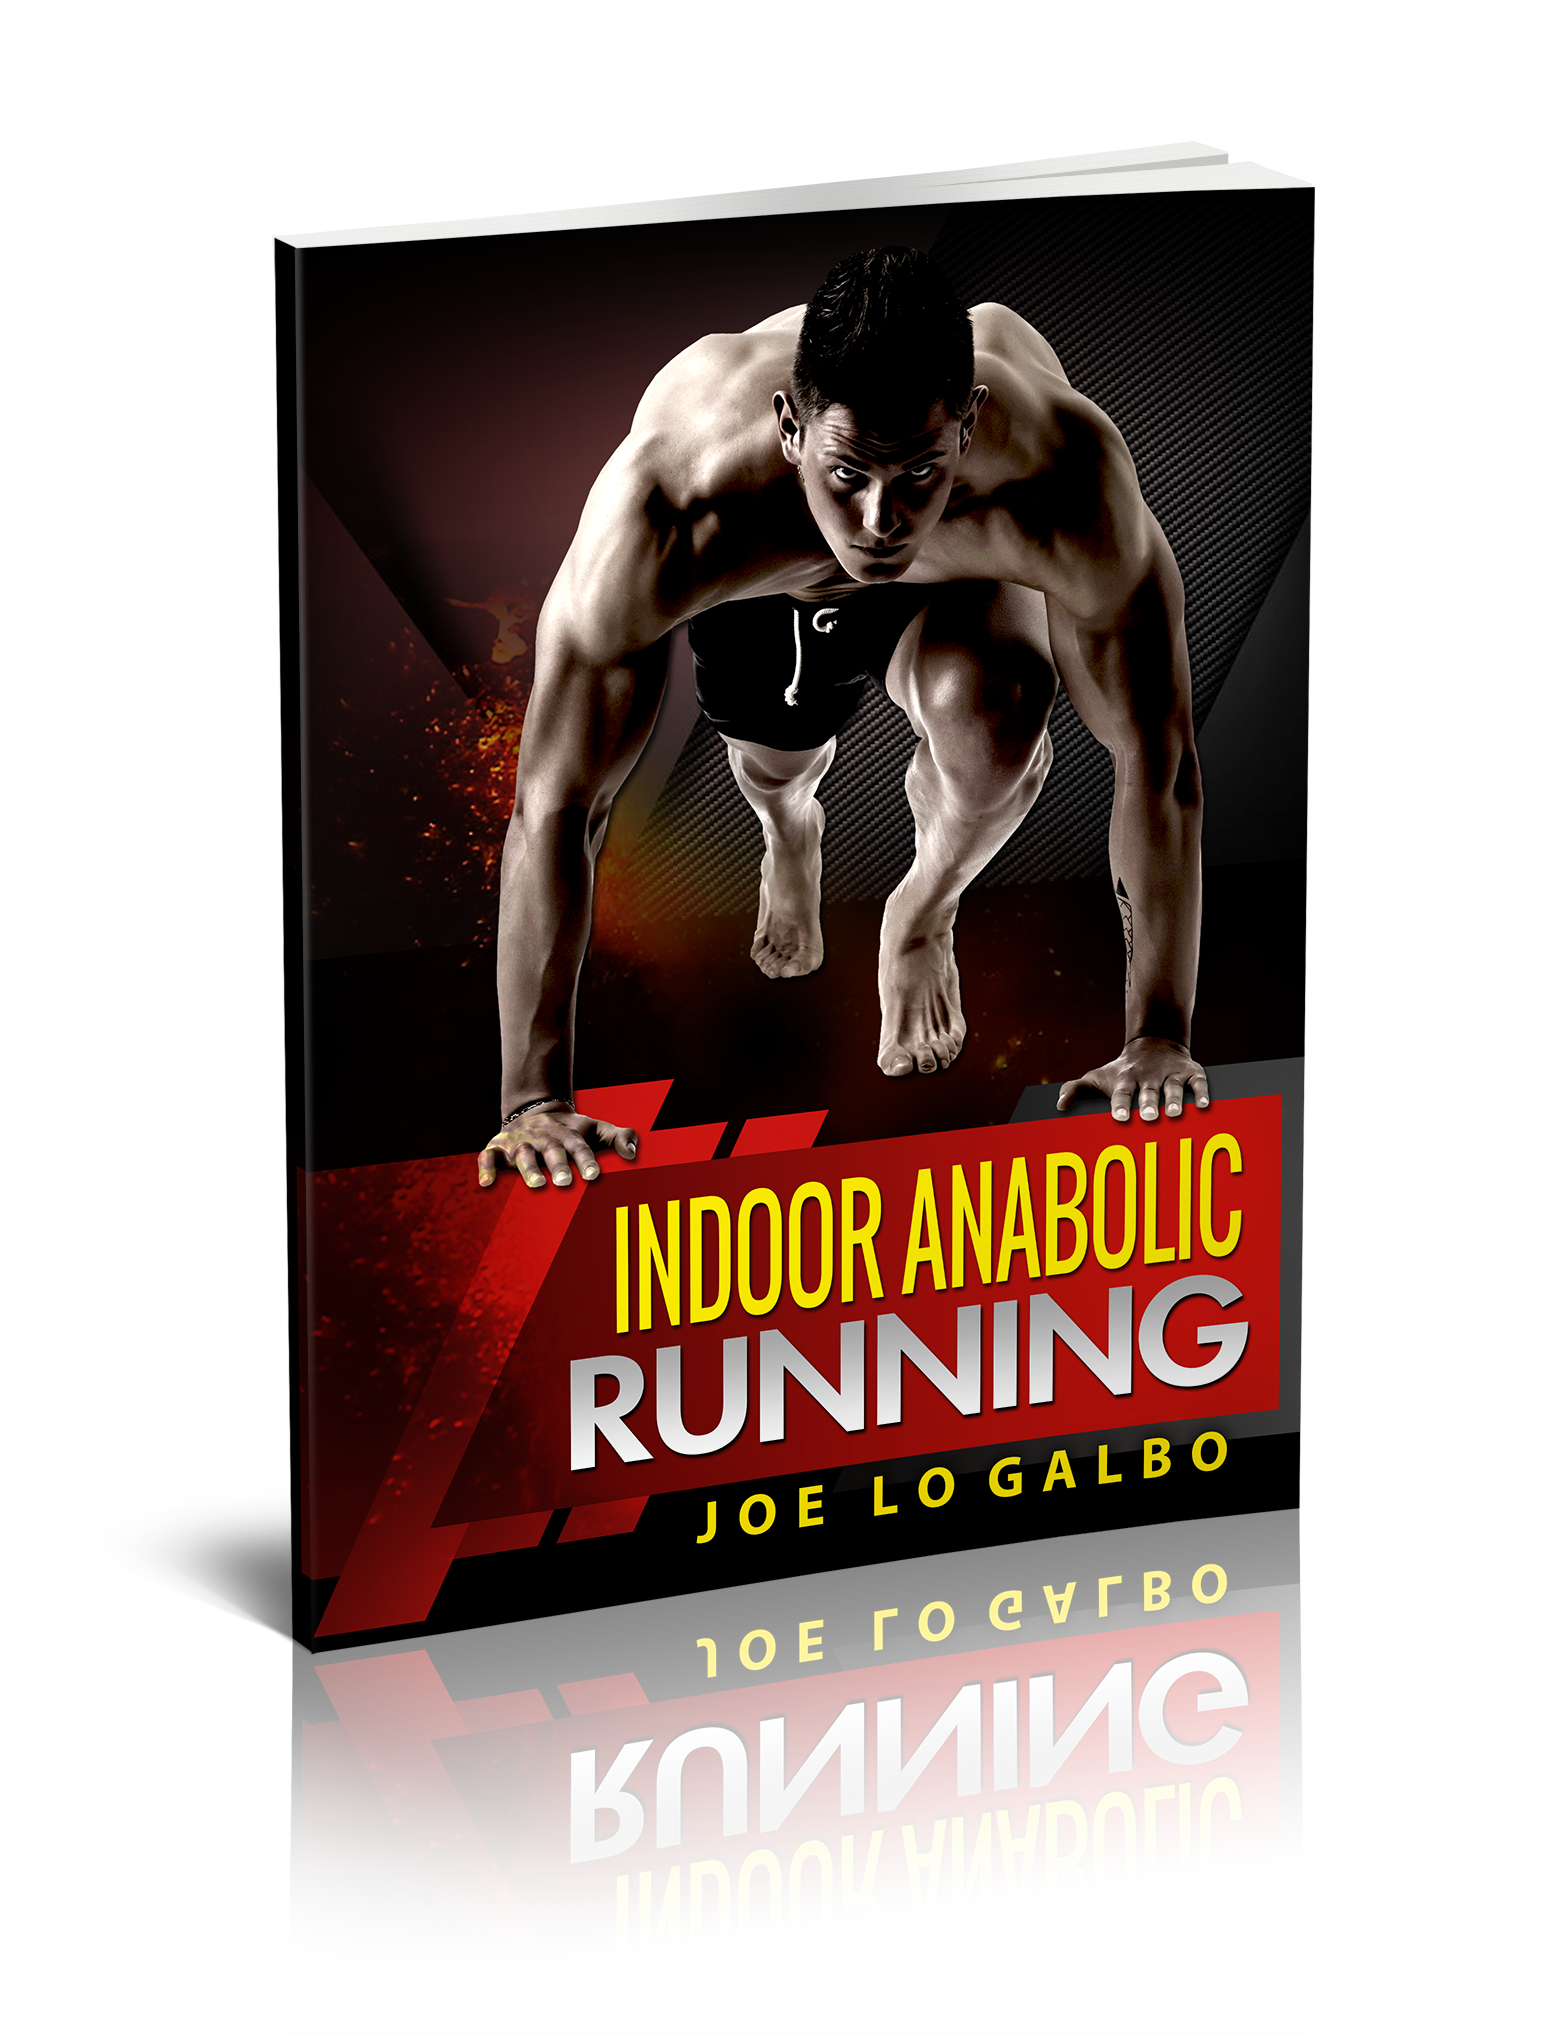 Anabolic Running 2.0 program